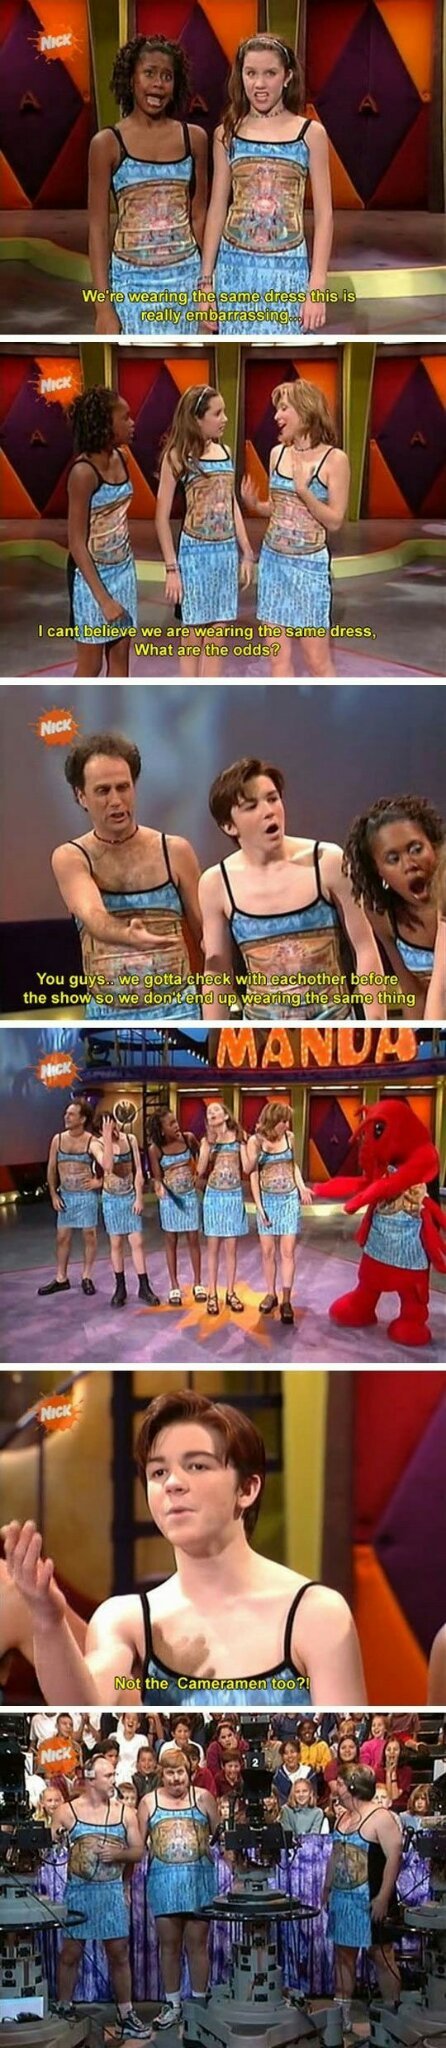 Nickelodeon in the 90s  - meme